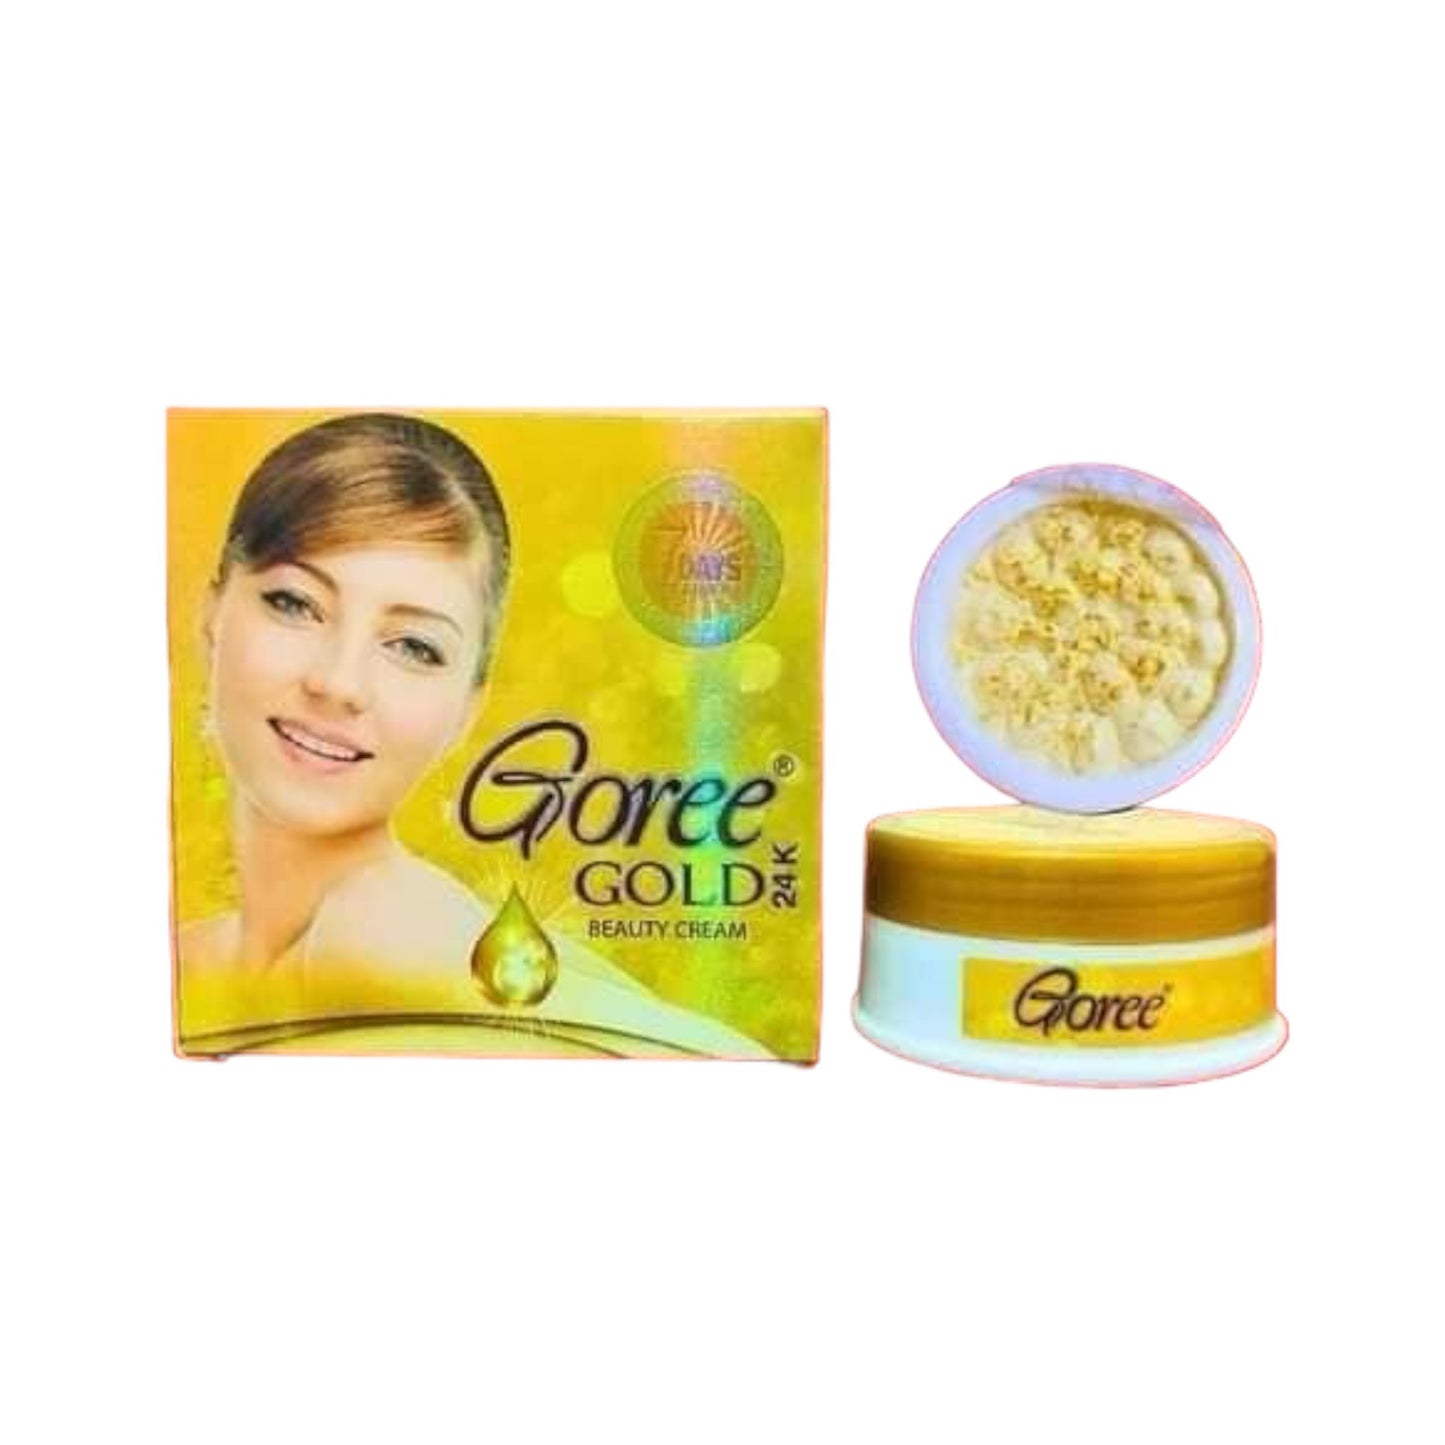 Goree 24K Gold Beauty Cream 17g